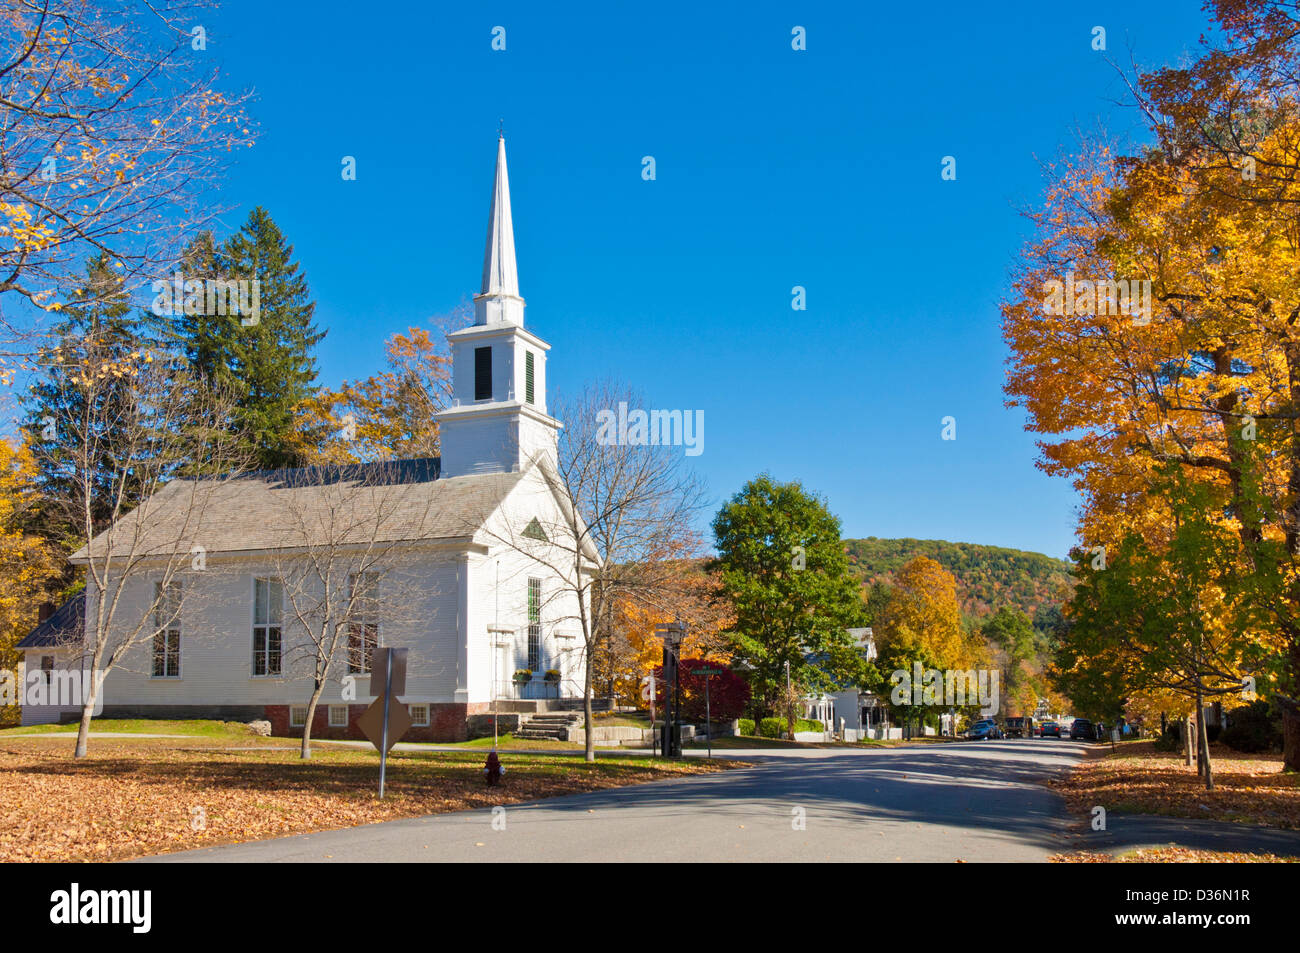 Otoño colores de otoño colores alrededor de blanco tradicional iglesia revestido de madera Grafton Vermont ESTADOS UNIDOS Estados Unidos de América Foto de stock